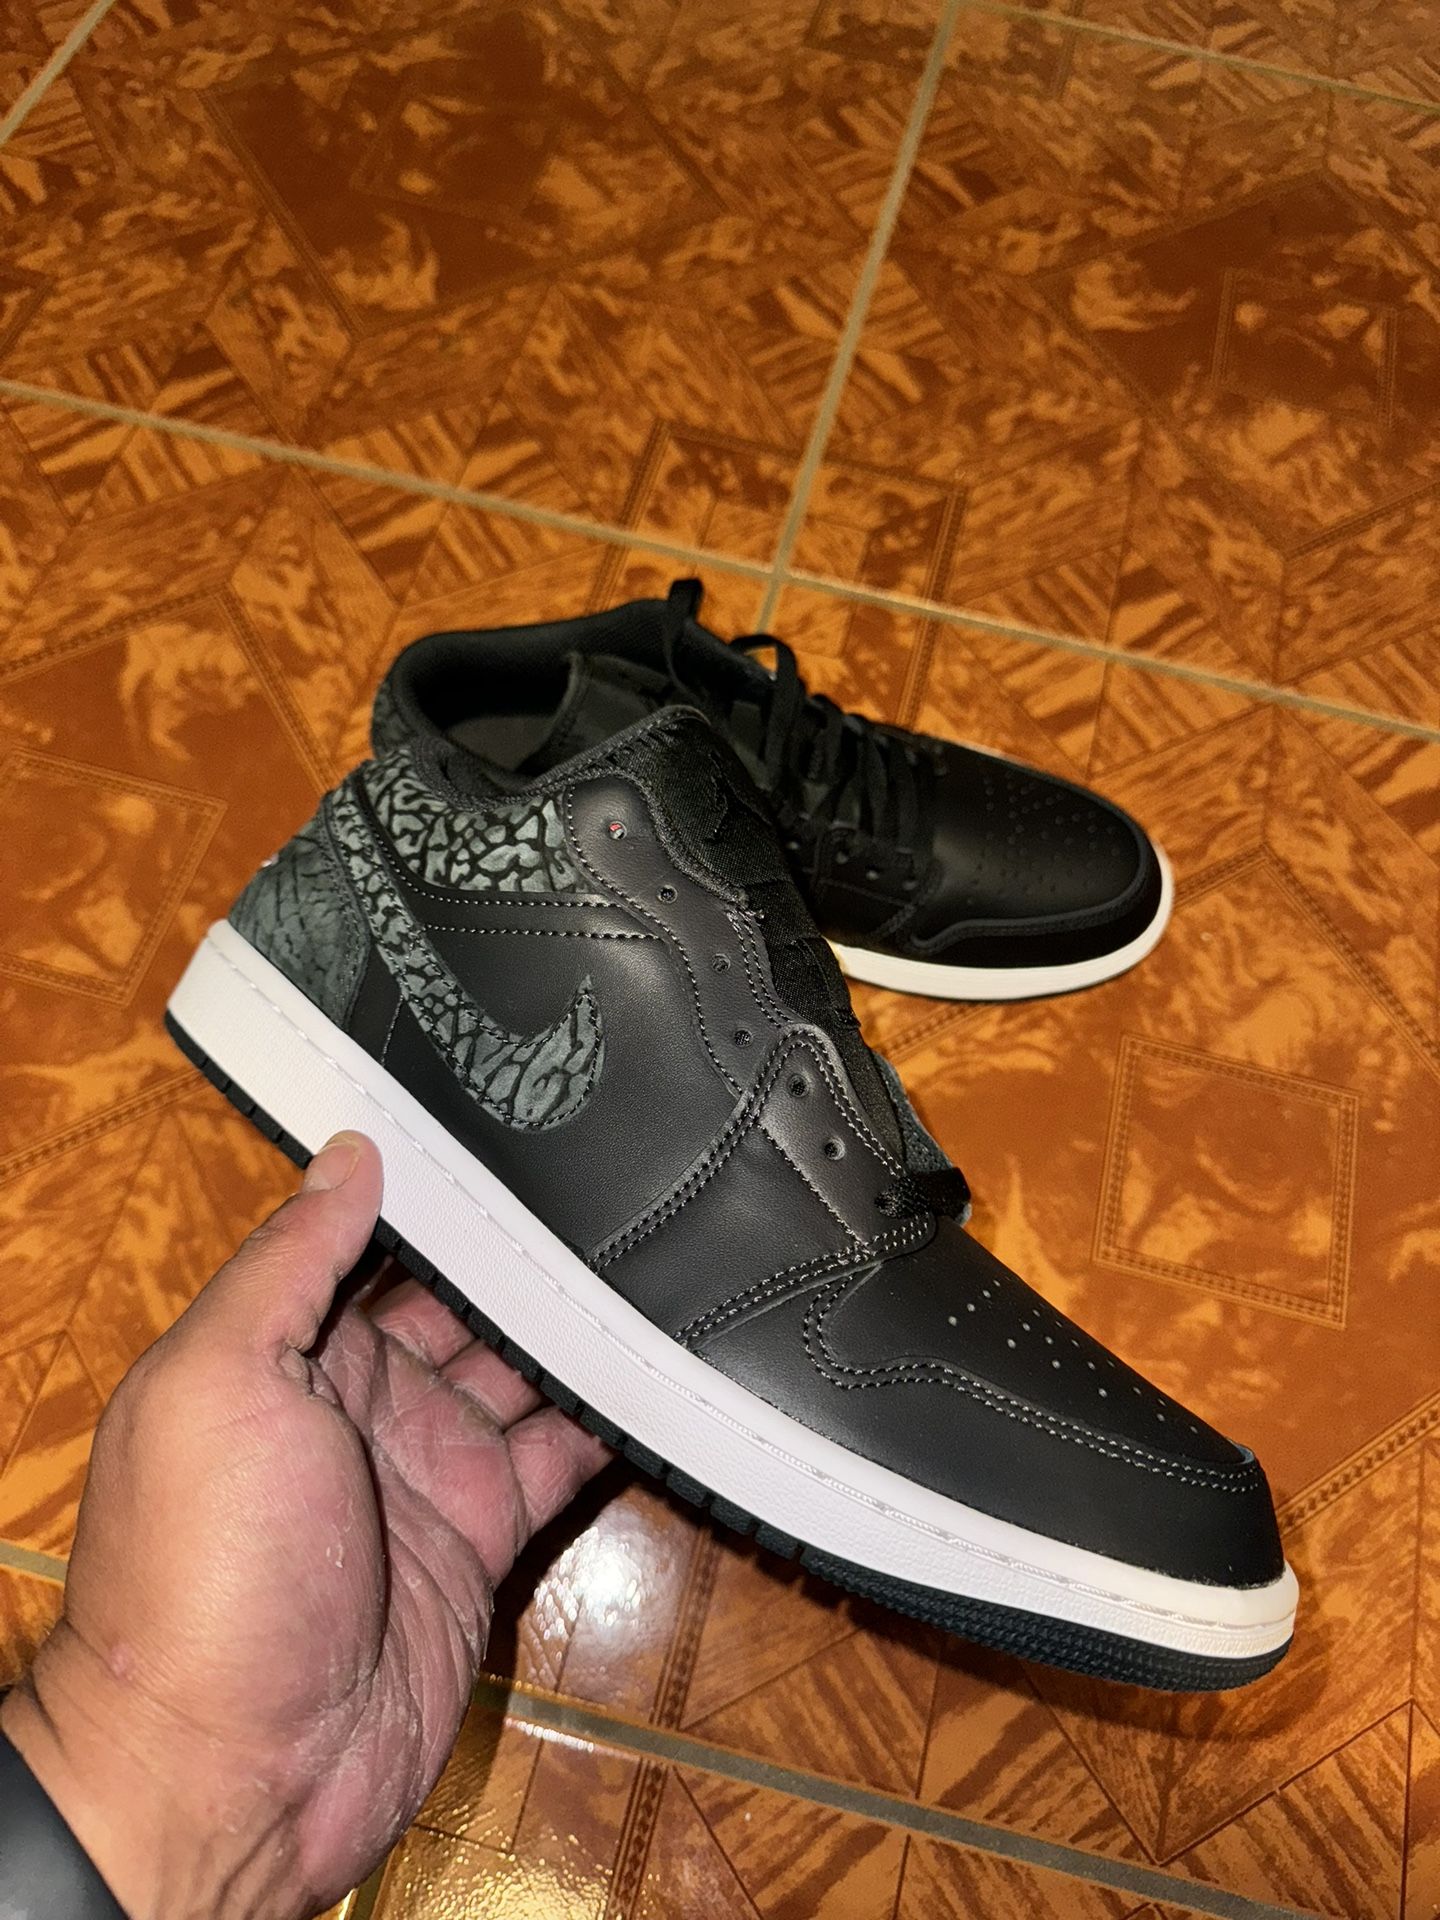 Jordans Size 9.5